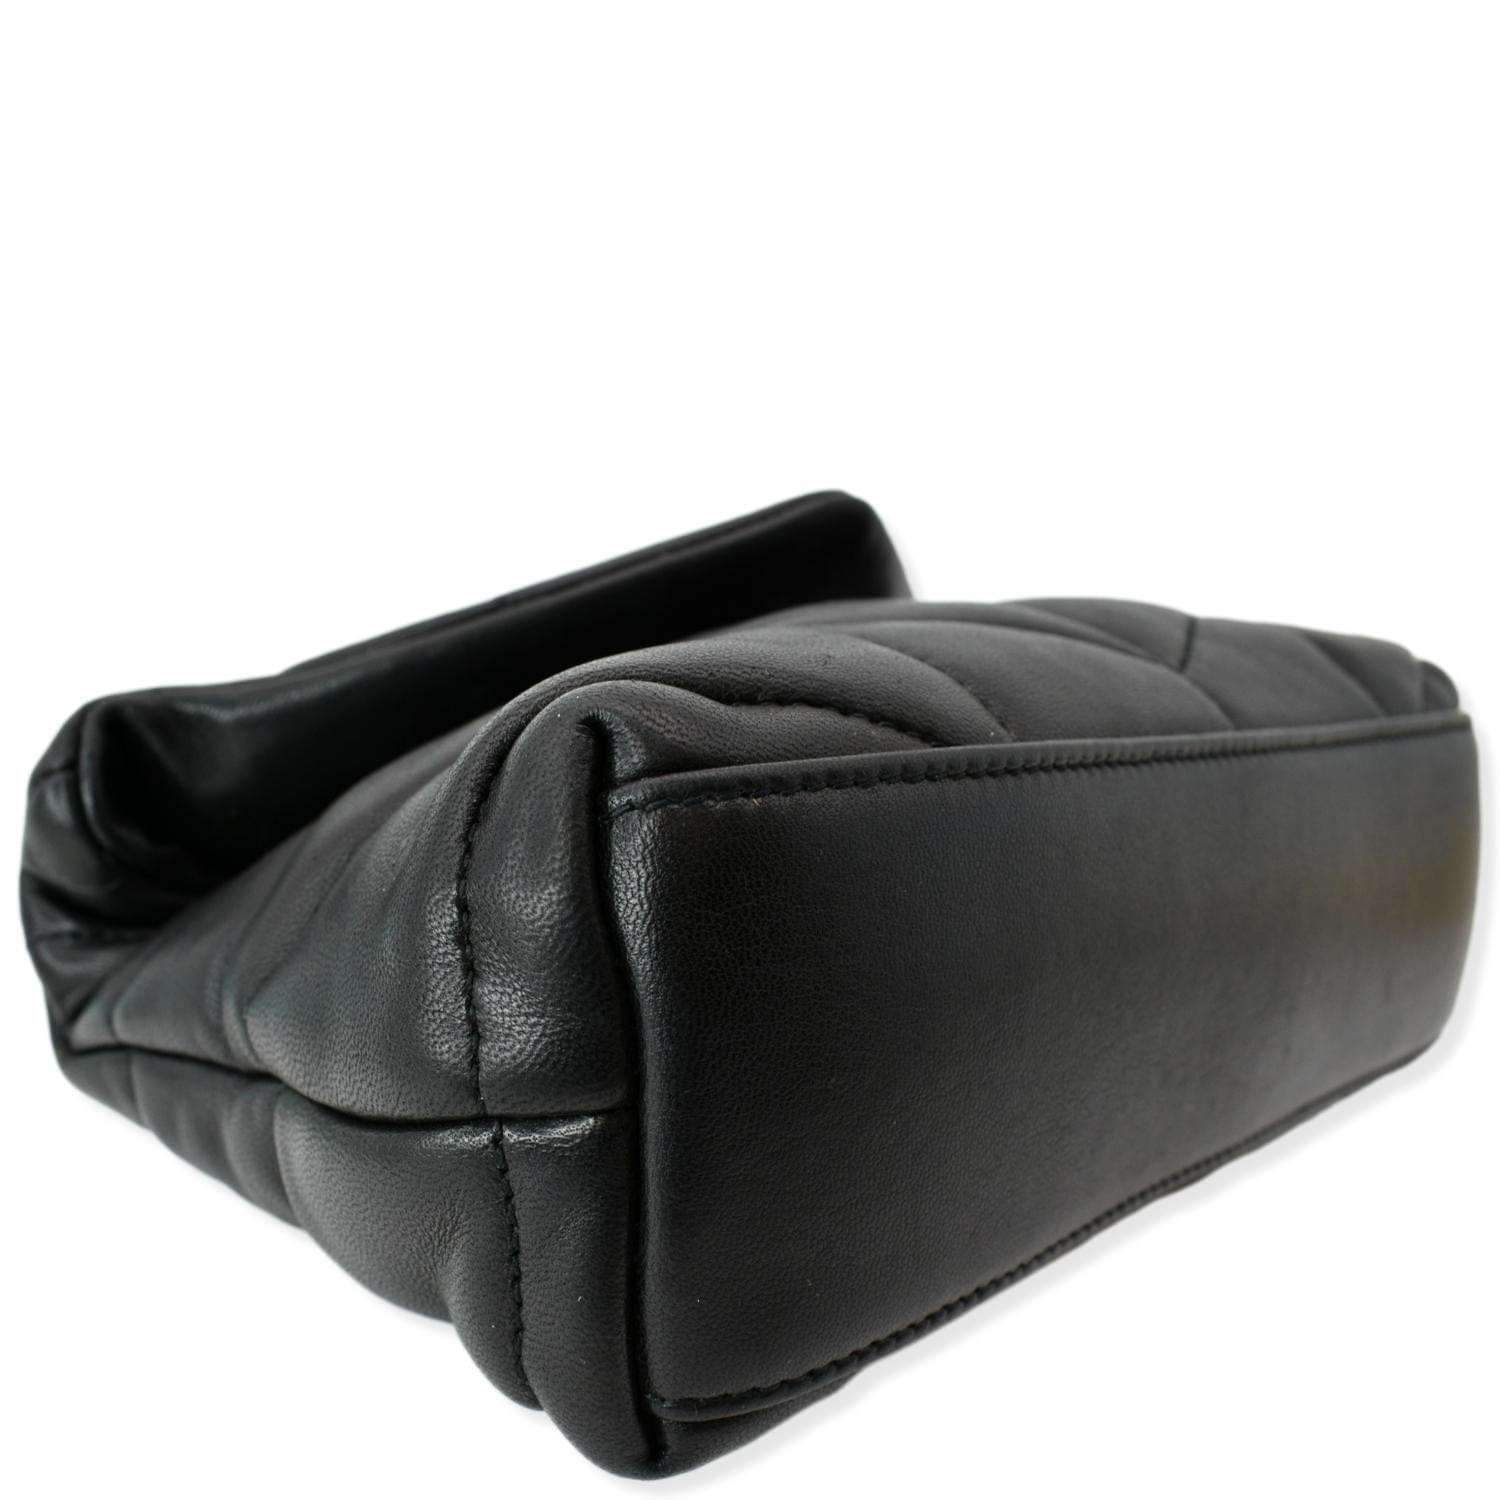 Loulou Puffer Mini Genuine Leather Crossbody Bag Black Super Soft